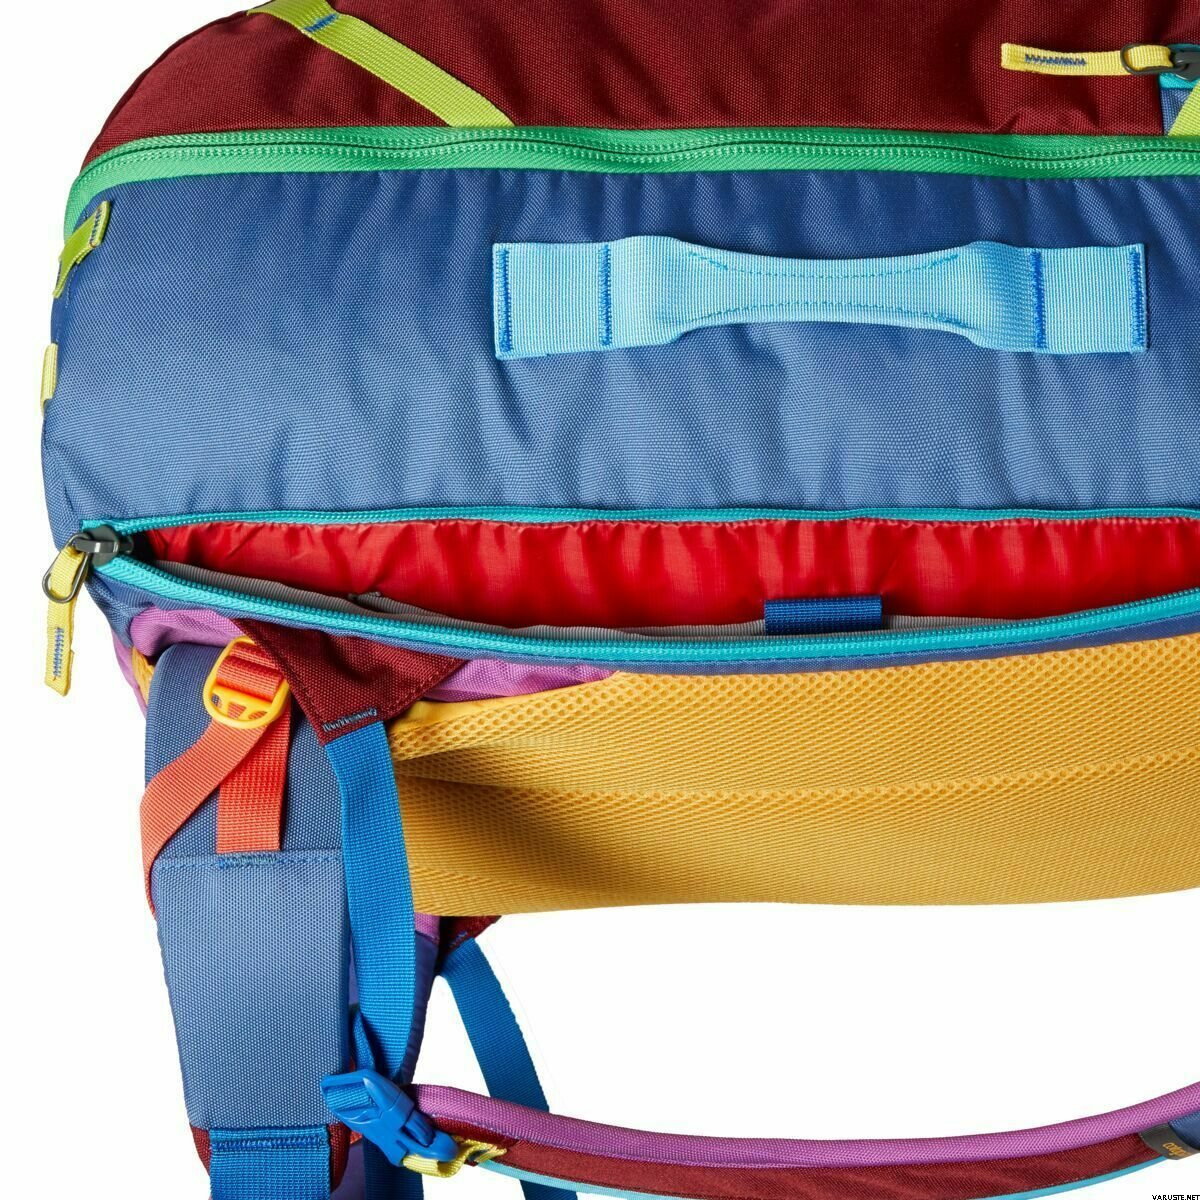 Cotopaxi Allpa 35L Travel Pack - Del Dia | Carry-on bags | Varuste.net ...